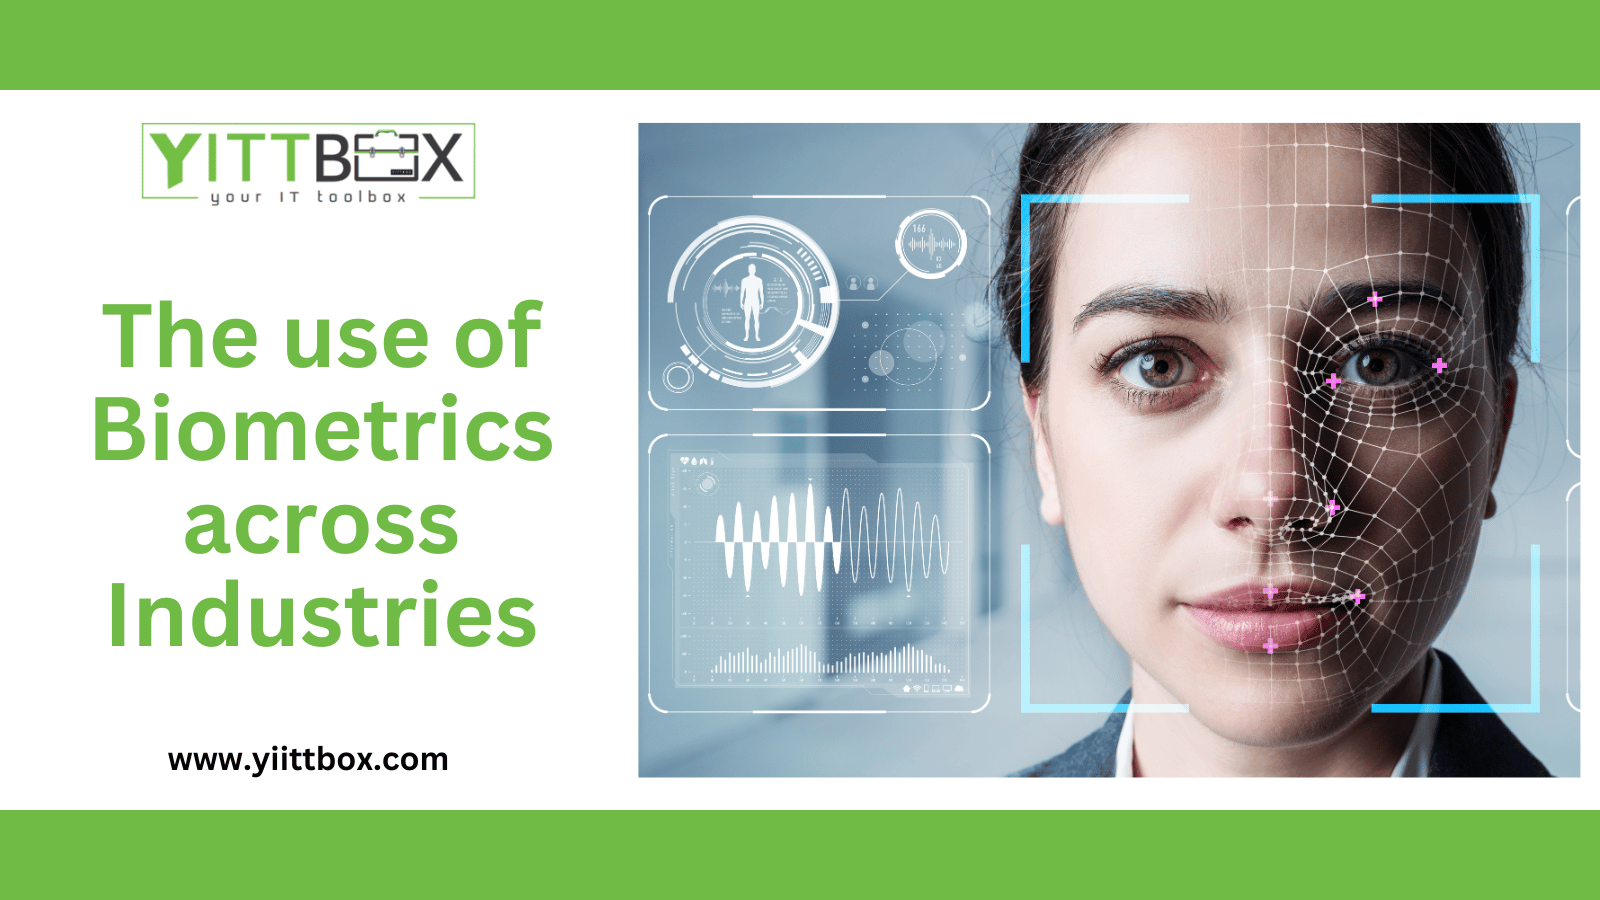 The use of biometrics across industries